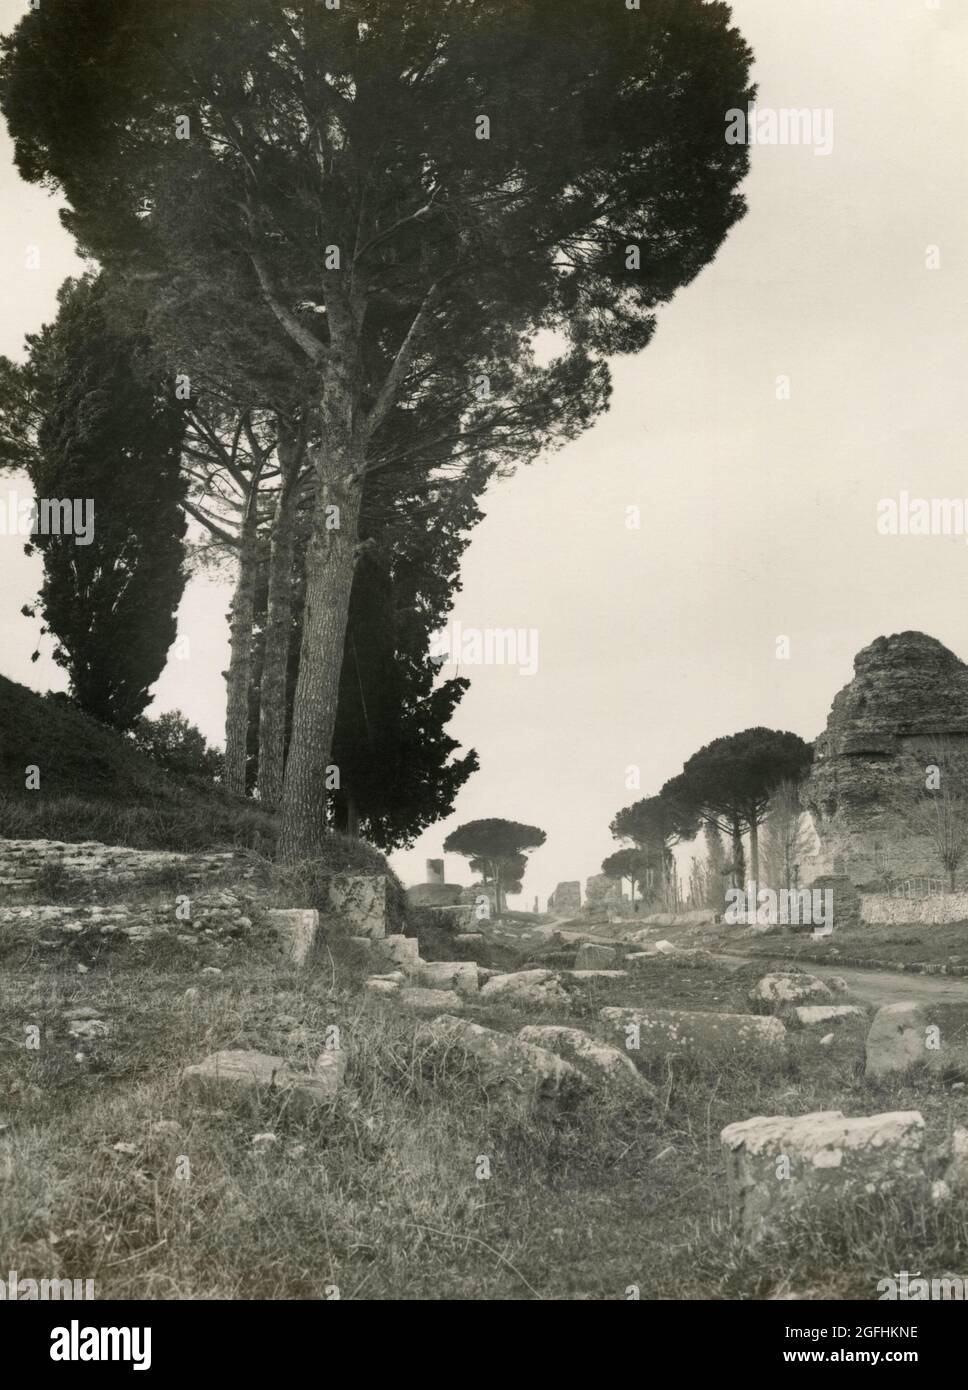 Via Appia Antica, Rome, Italy 1920s Stock Photo